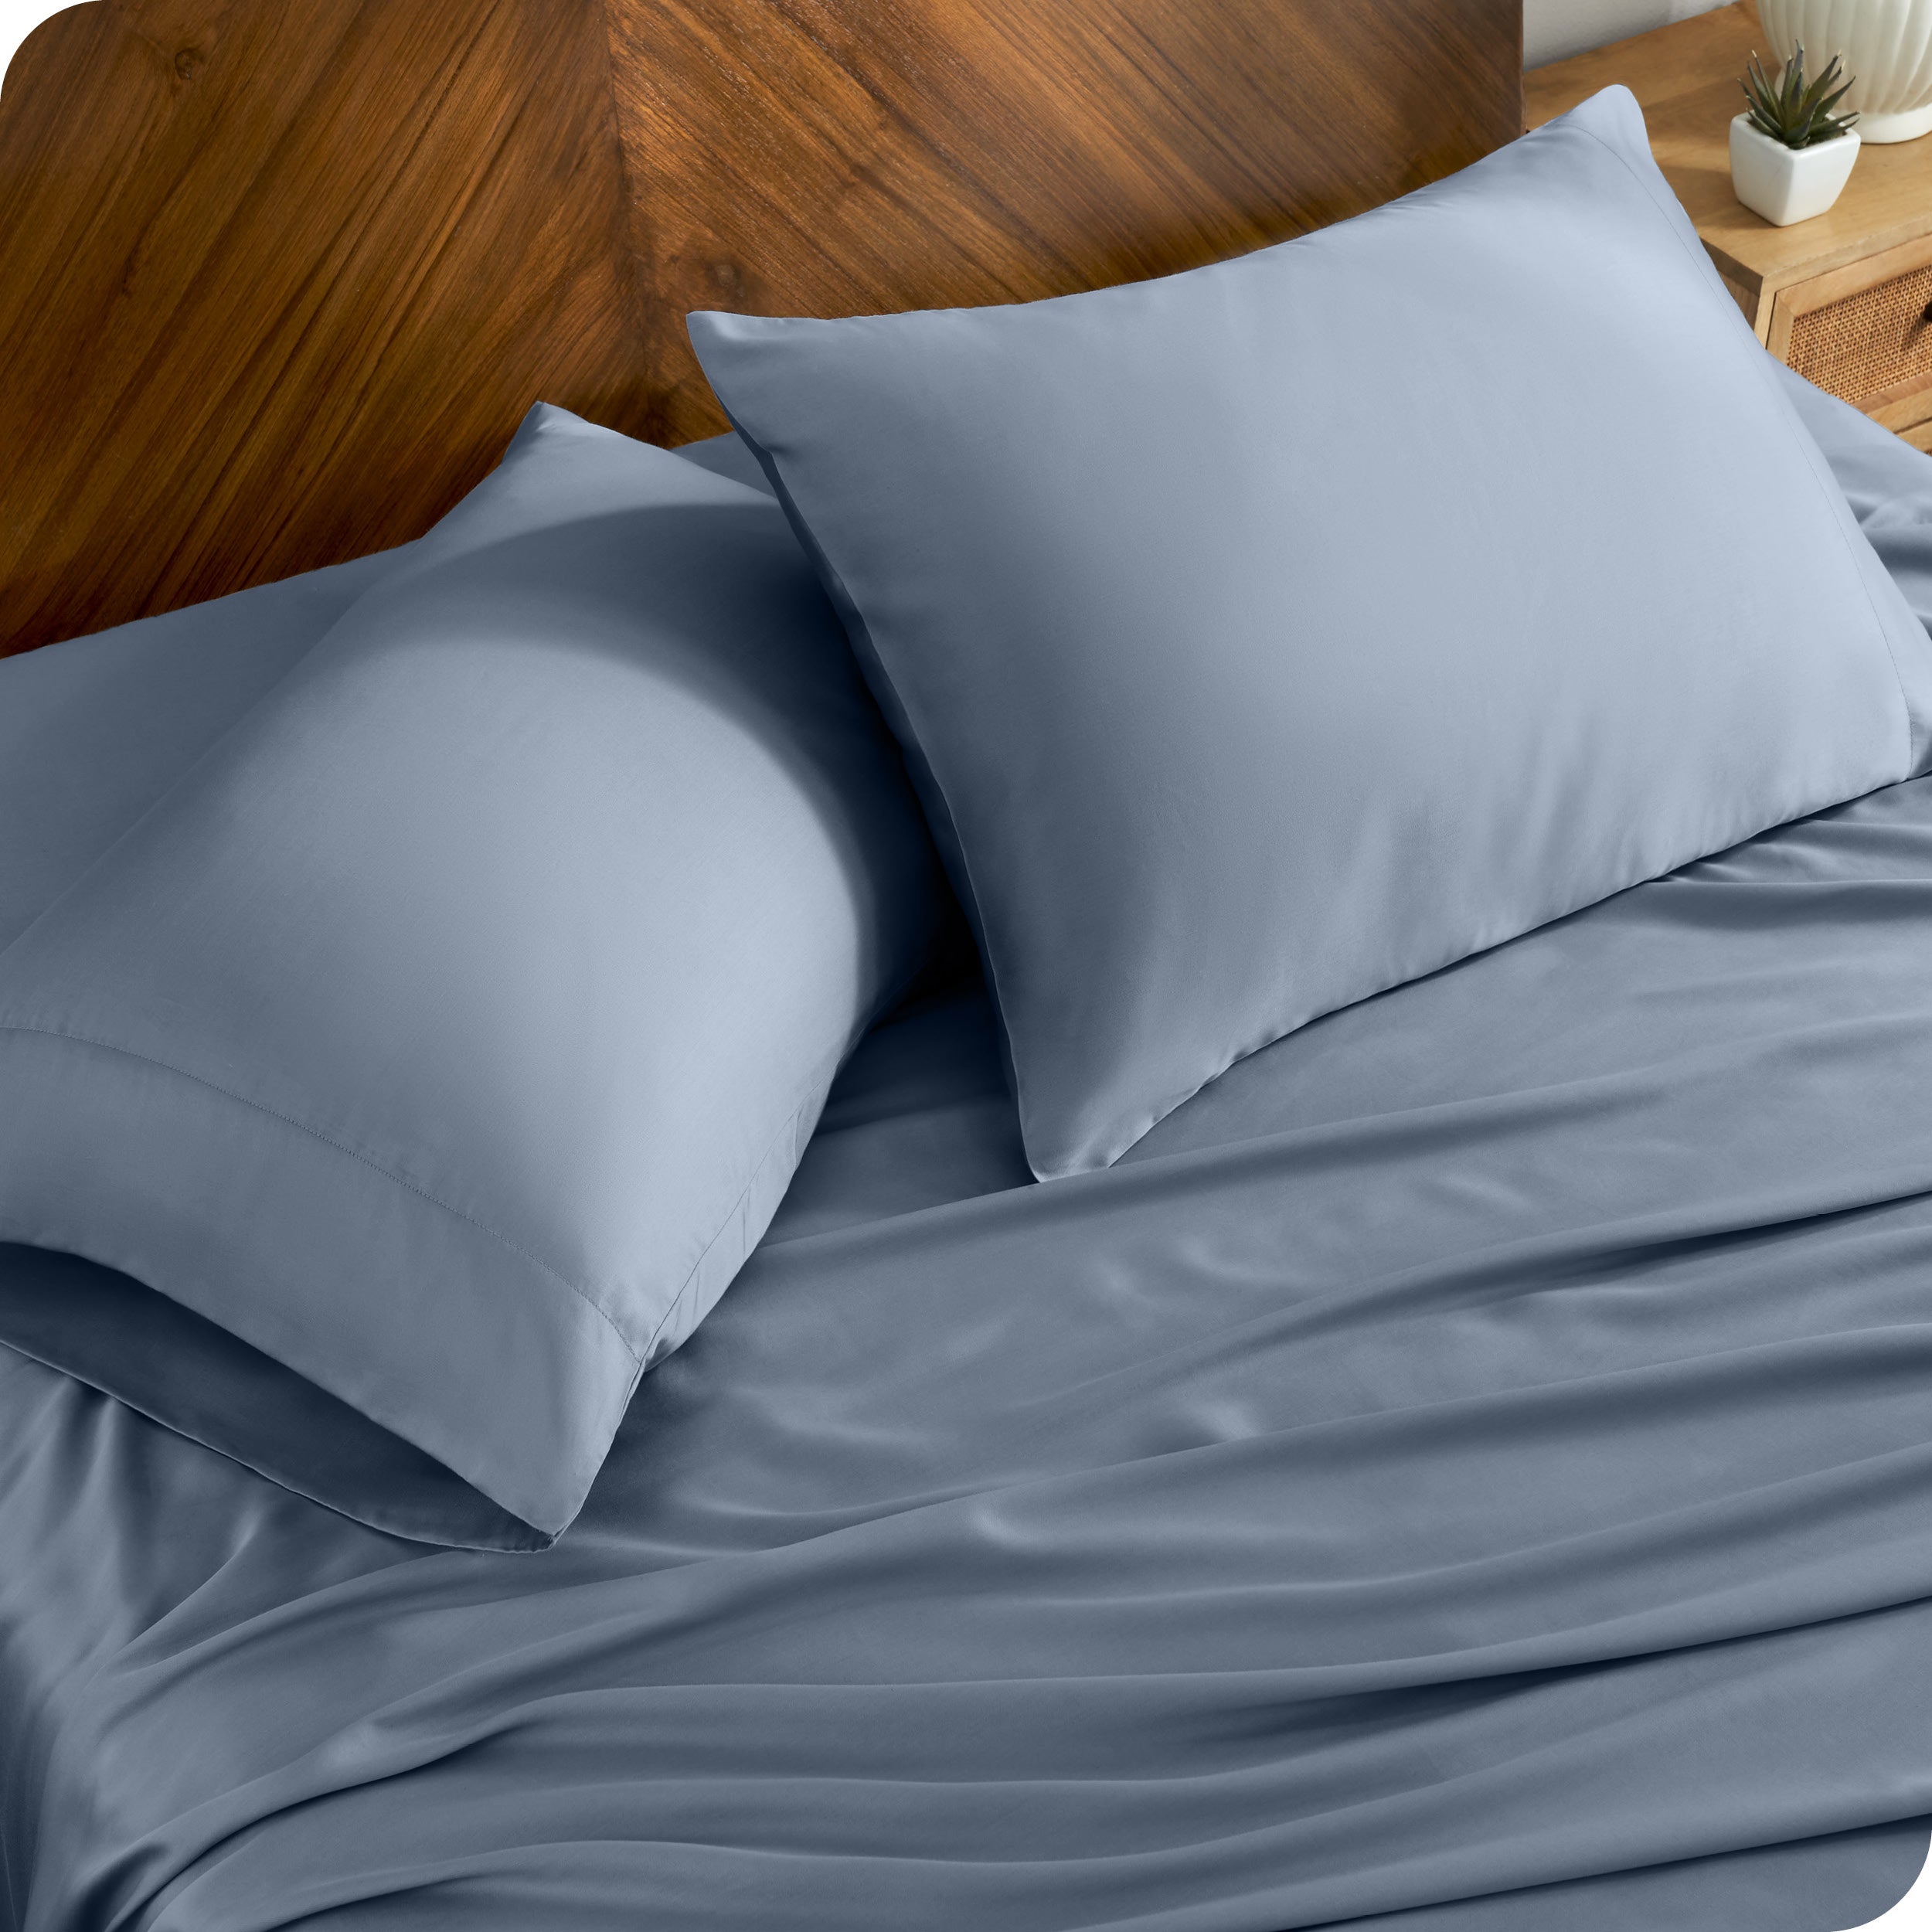 TENCEL™ pillowcases on pillows near a wooden headboard